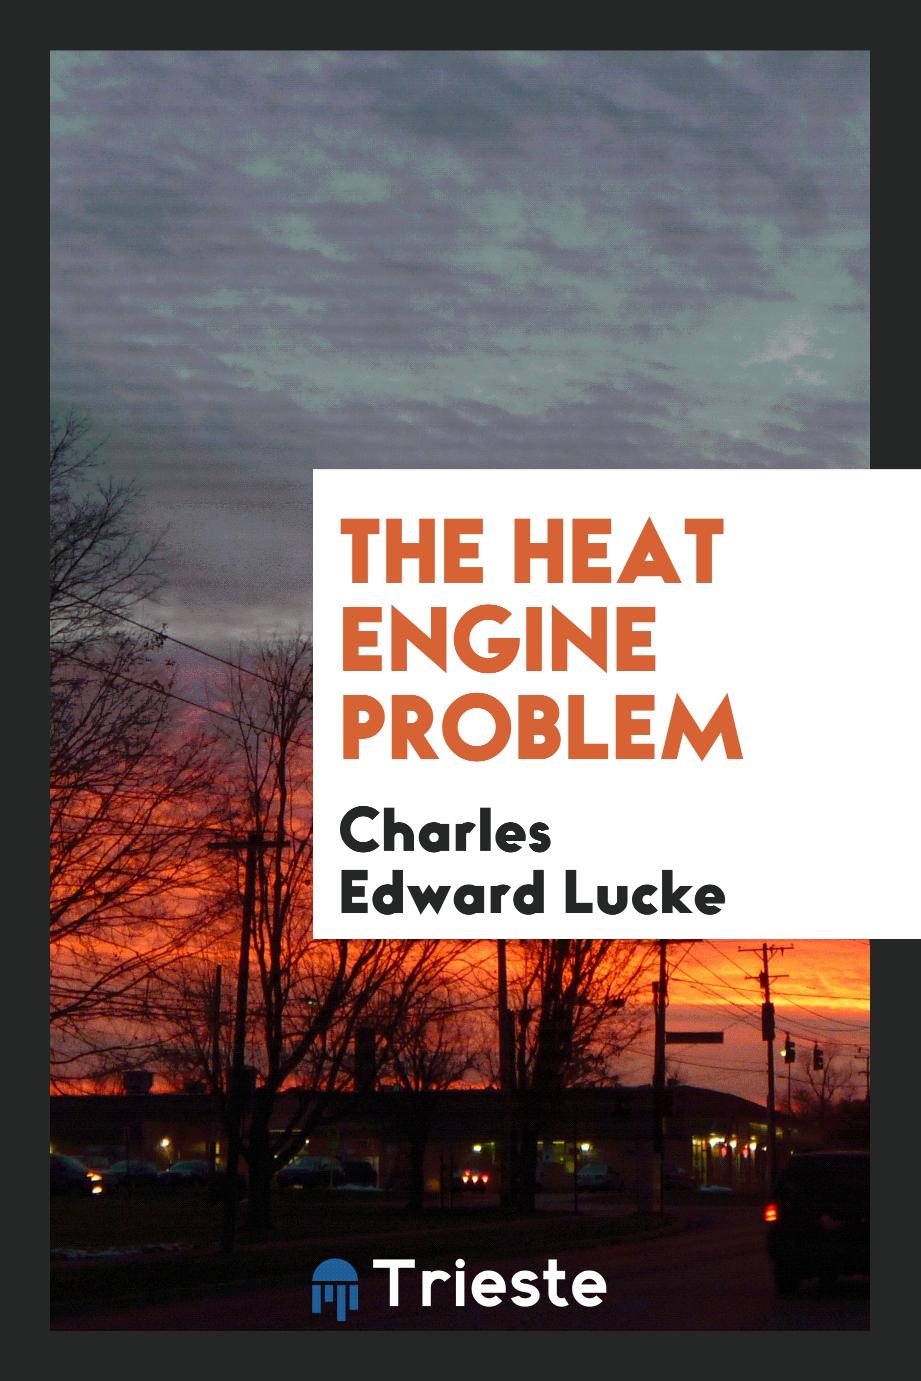 The heat engine problem